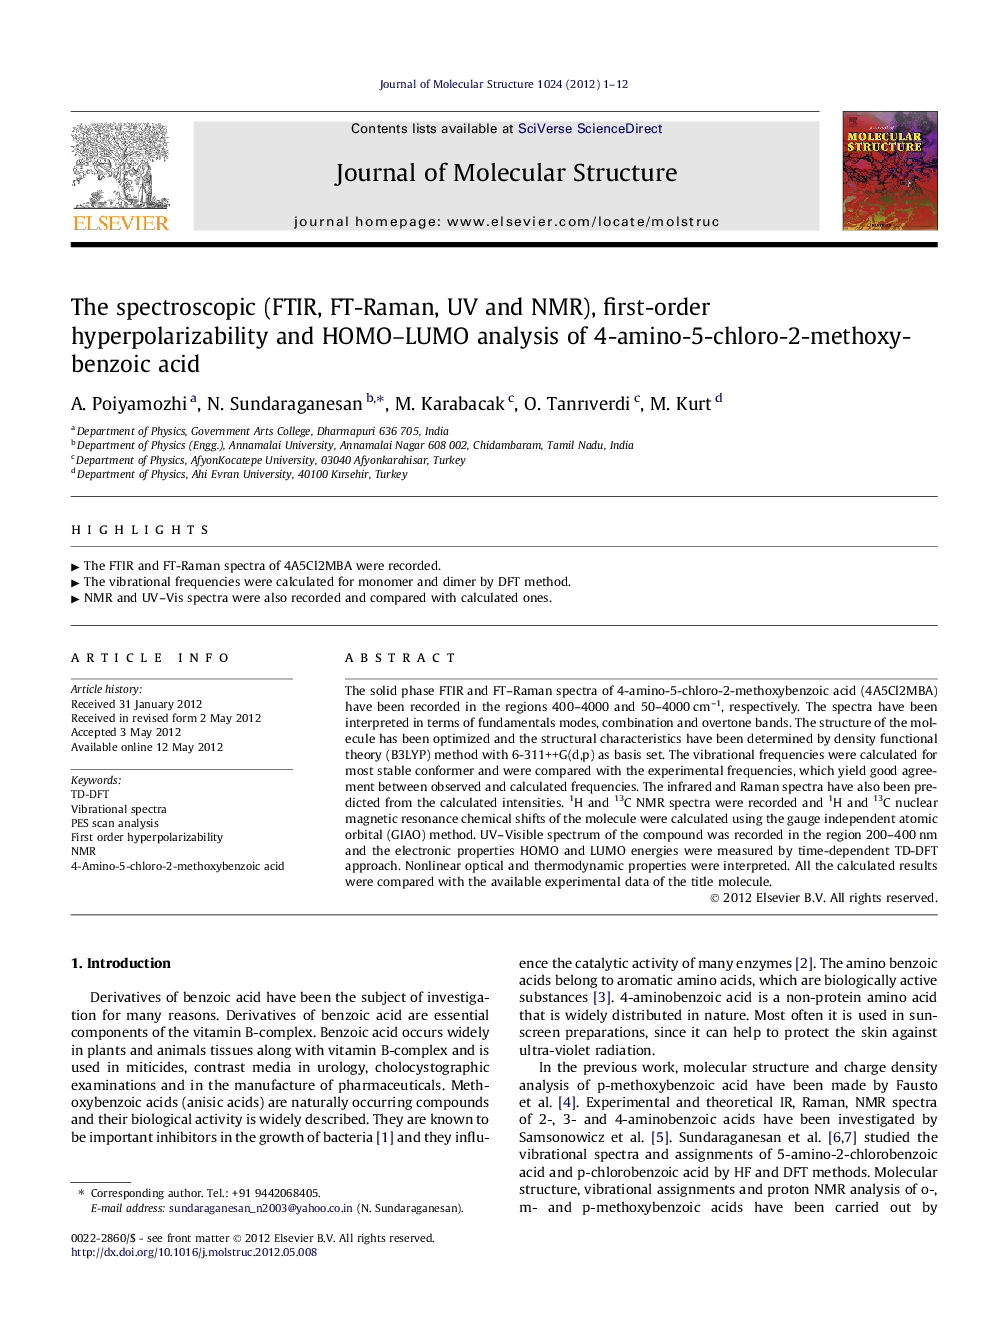 The spectroscopic (FTIR, FT-Raman, UV and NMR), first-order hyperpolarizability and HOMO–LUMO analysis of 4-amino-5-chloro-2-methoxybenzoic acid